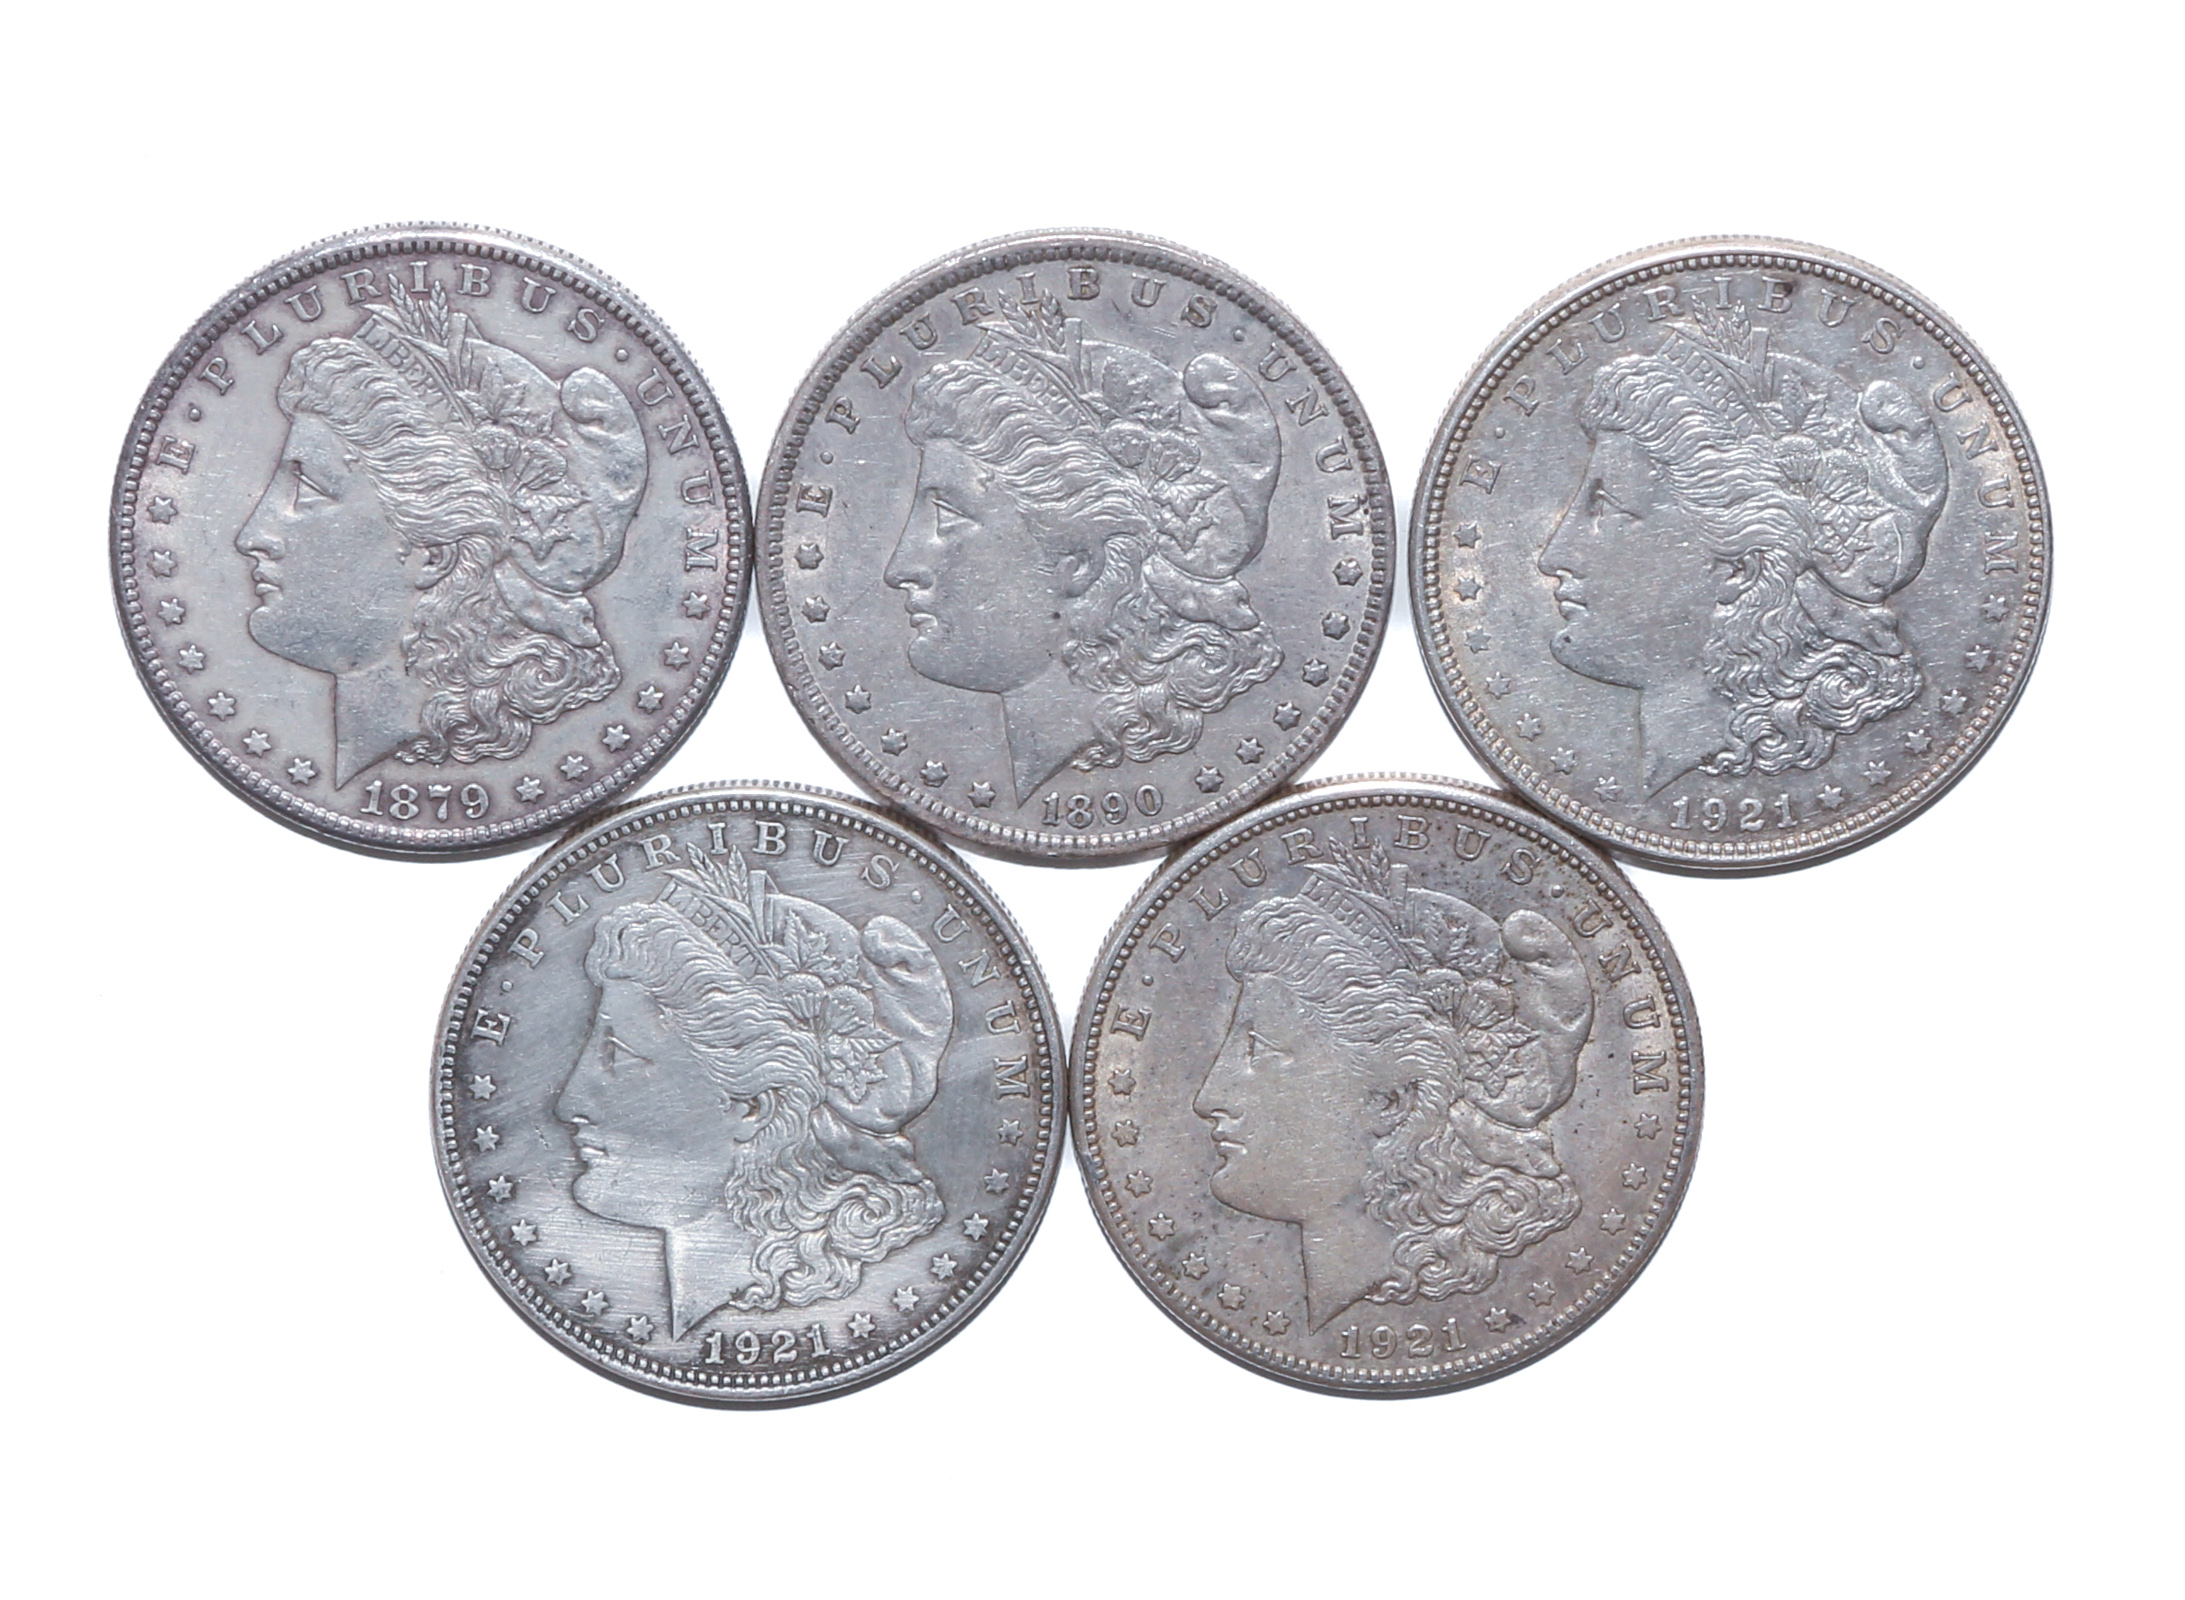 FIVE MORGAN SILVER DOLLARS 1879-S